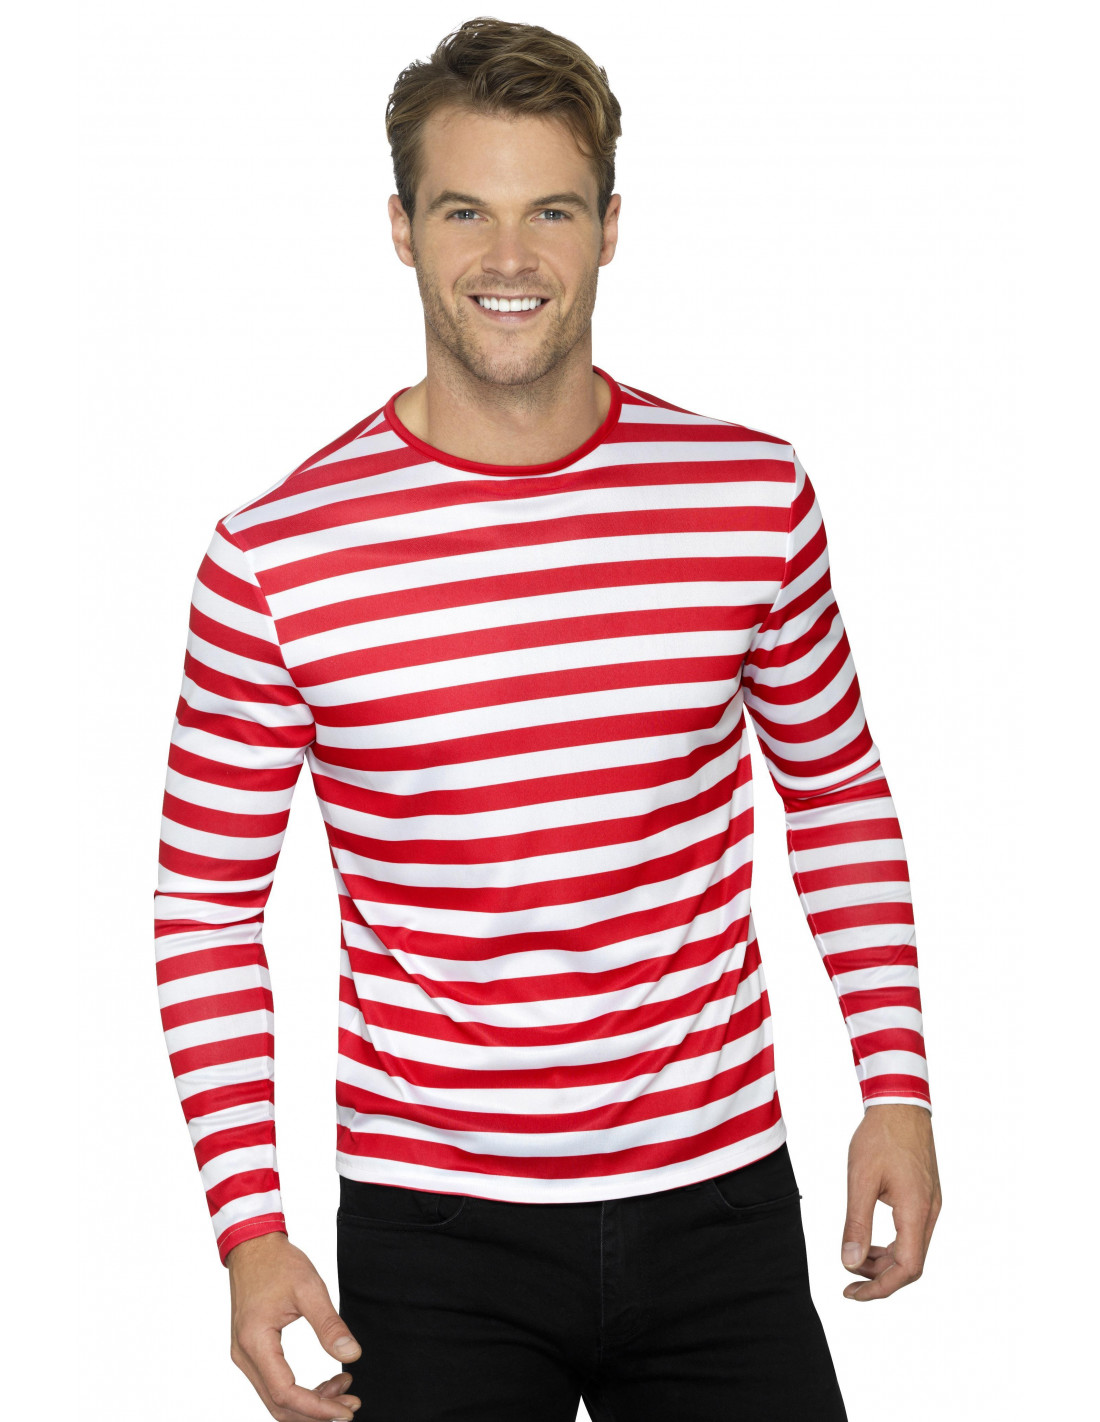 Camiseta de punto con rayas - Rojo/Rayas blancas - MUJER